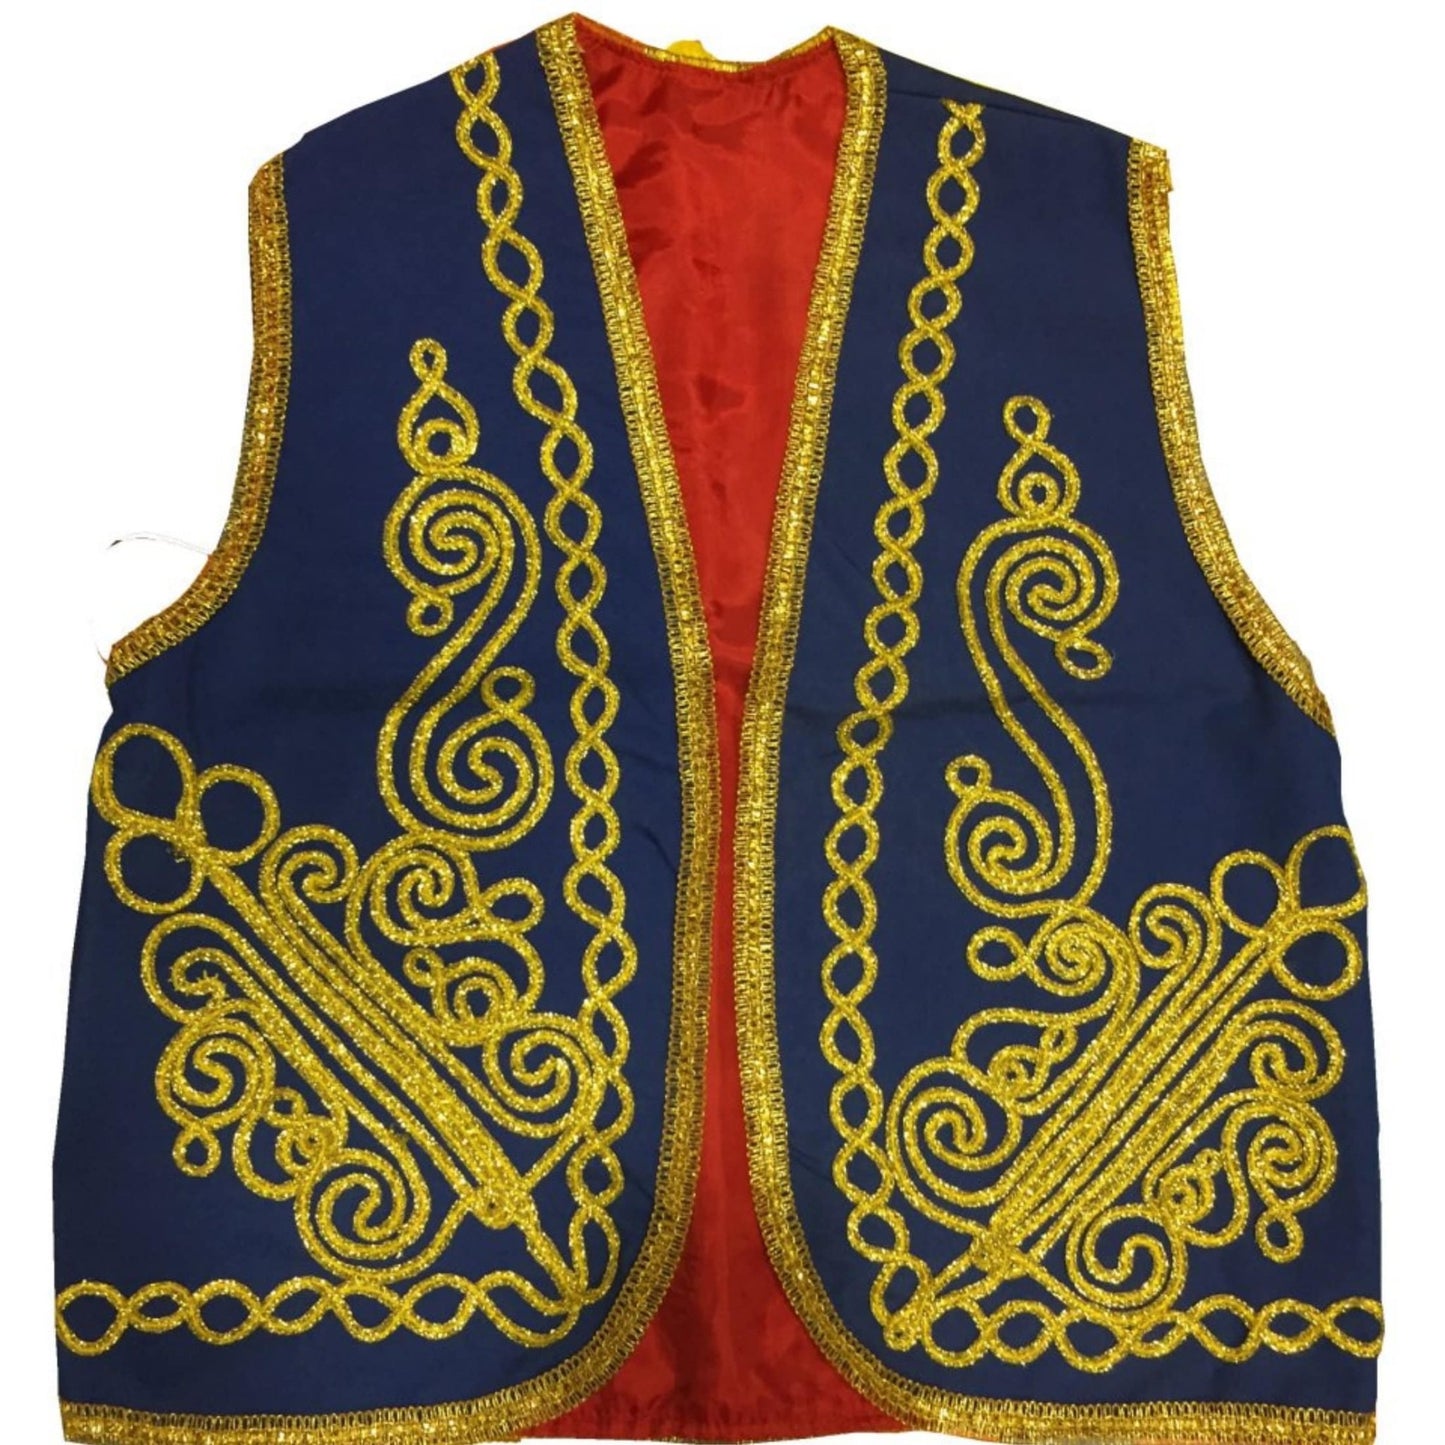 Handmade Embroidered Velvet Ottoman Vest - Traditional Muslim Men's Costume - Golden Embroidery - Abdulhamid & Fatih Sultan Mehmet Gift - Turkish TV Series